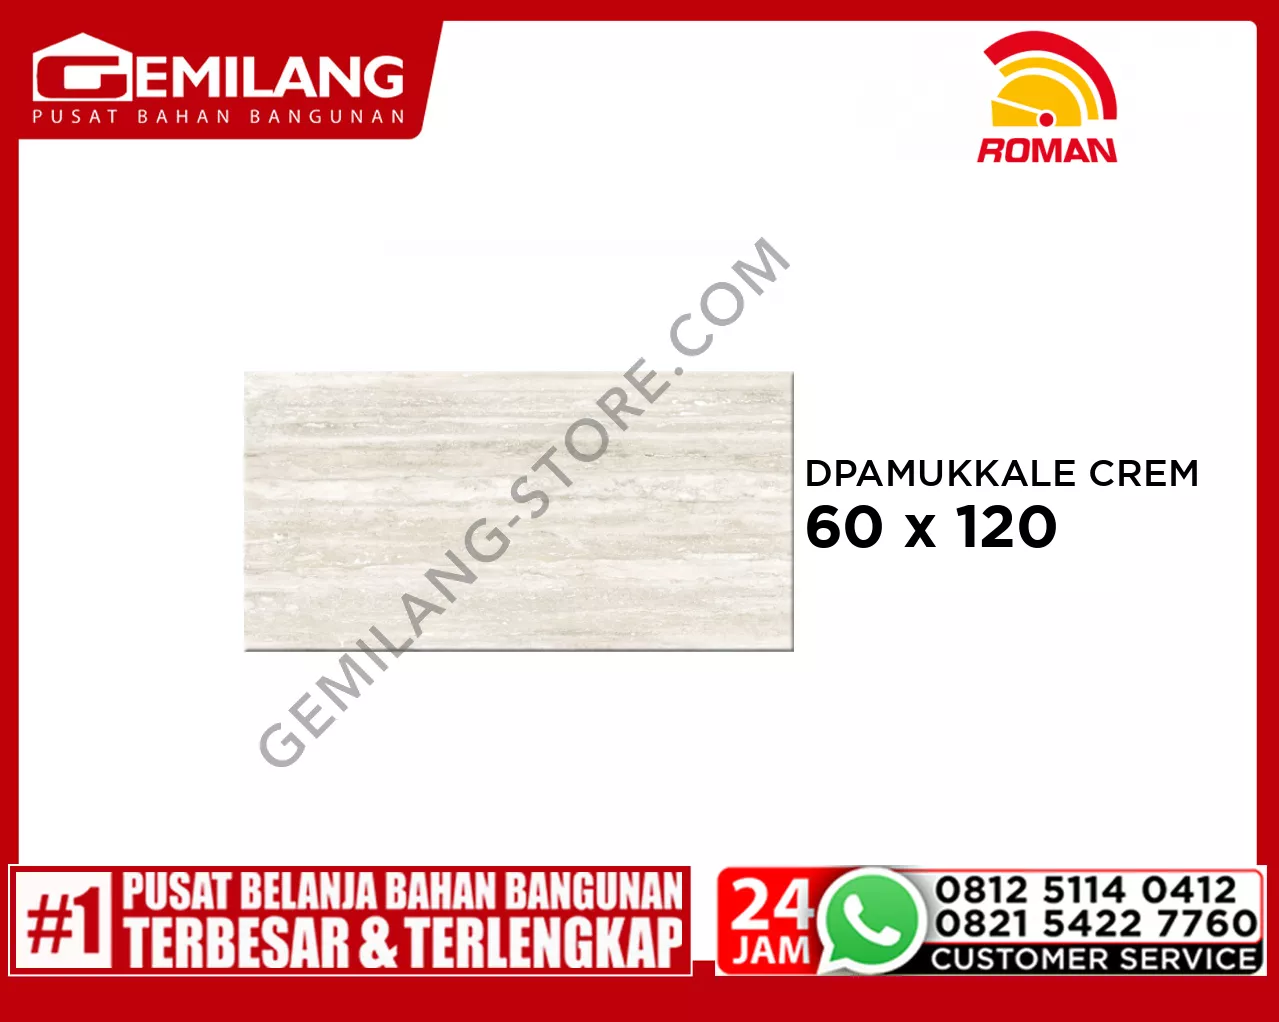 ROMAN GRANIT DPAMUKKALE CREMA (GT1269863FR) 60 x 120